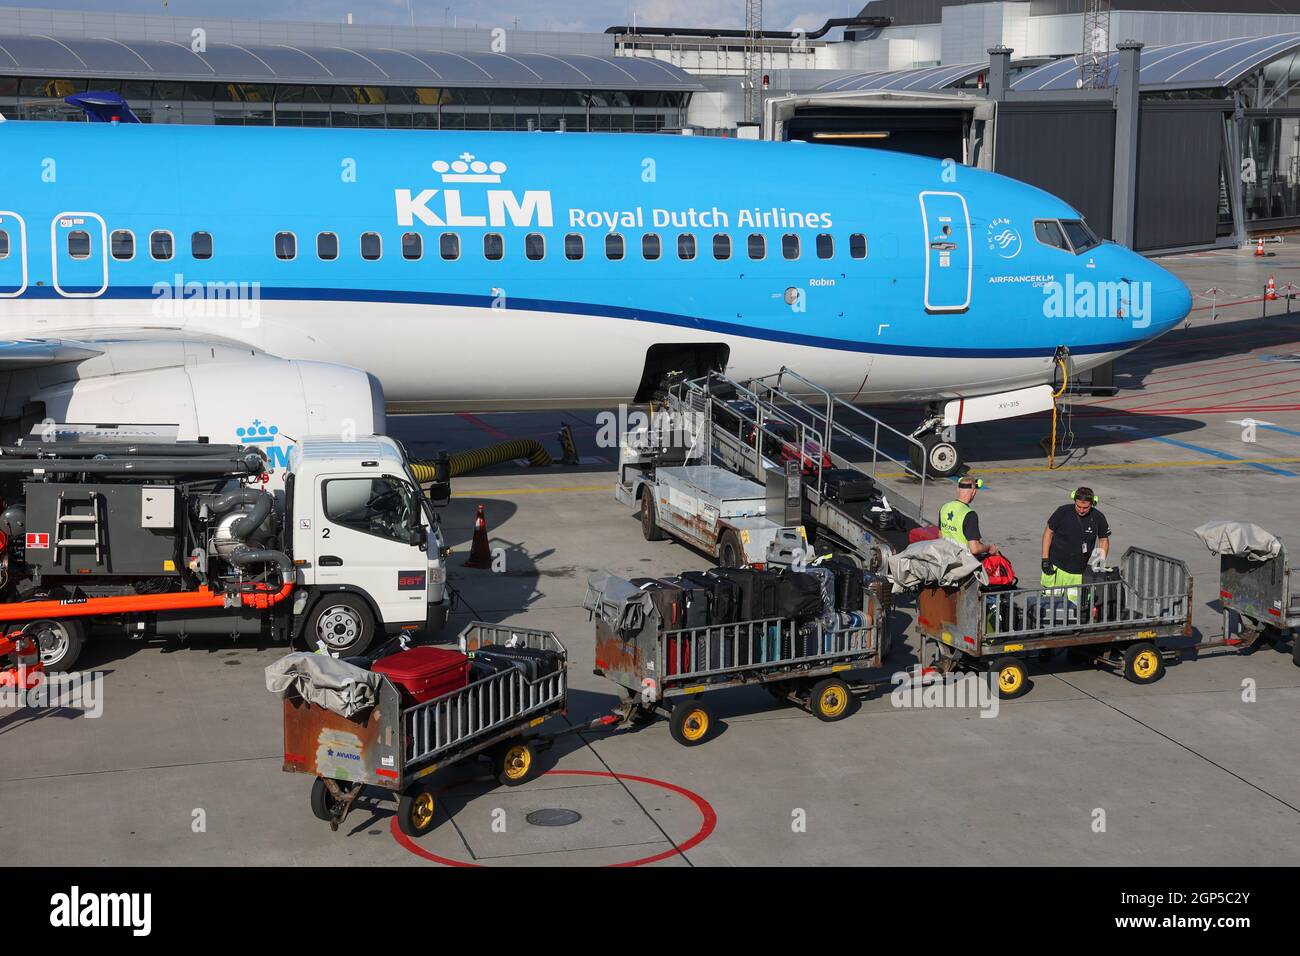 Workers unloading luggage from a KLM airplane at Copenhagen Airport Kastrup, Copenhagen, Denmark, Europe Stock Photo